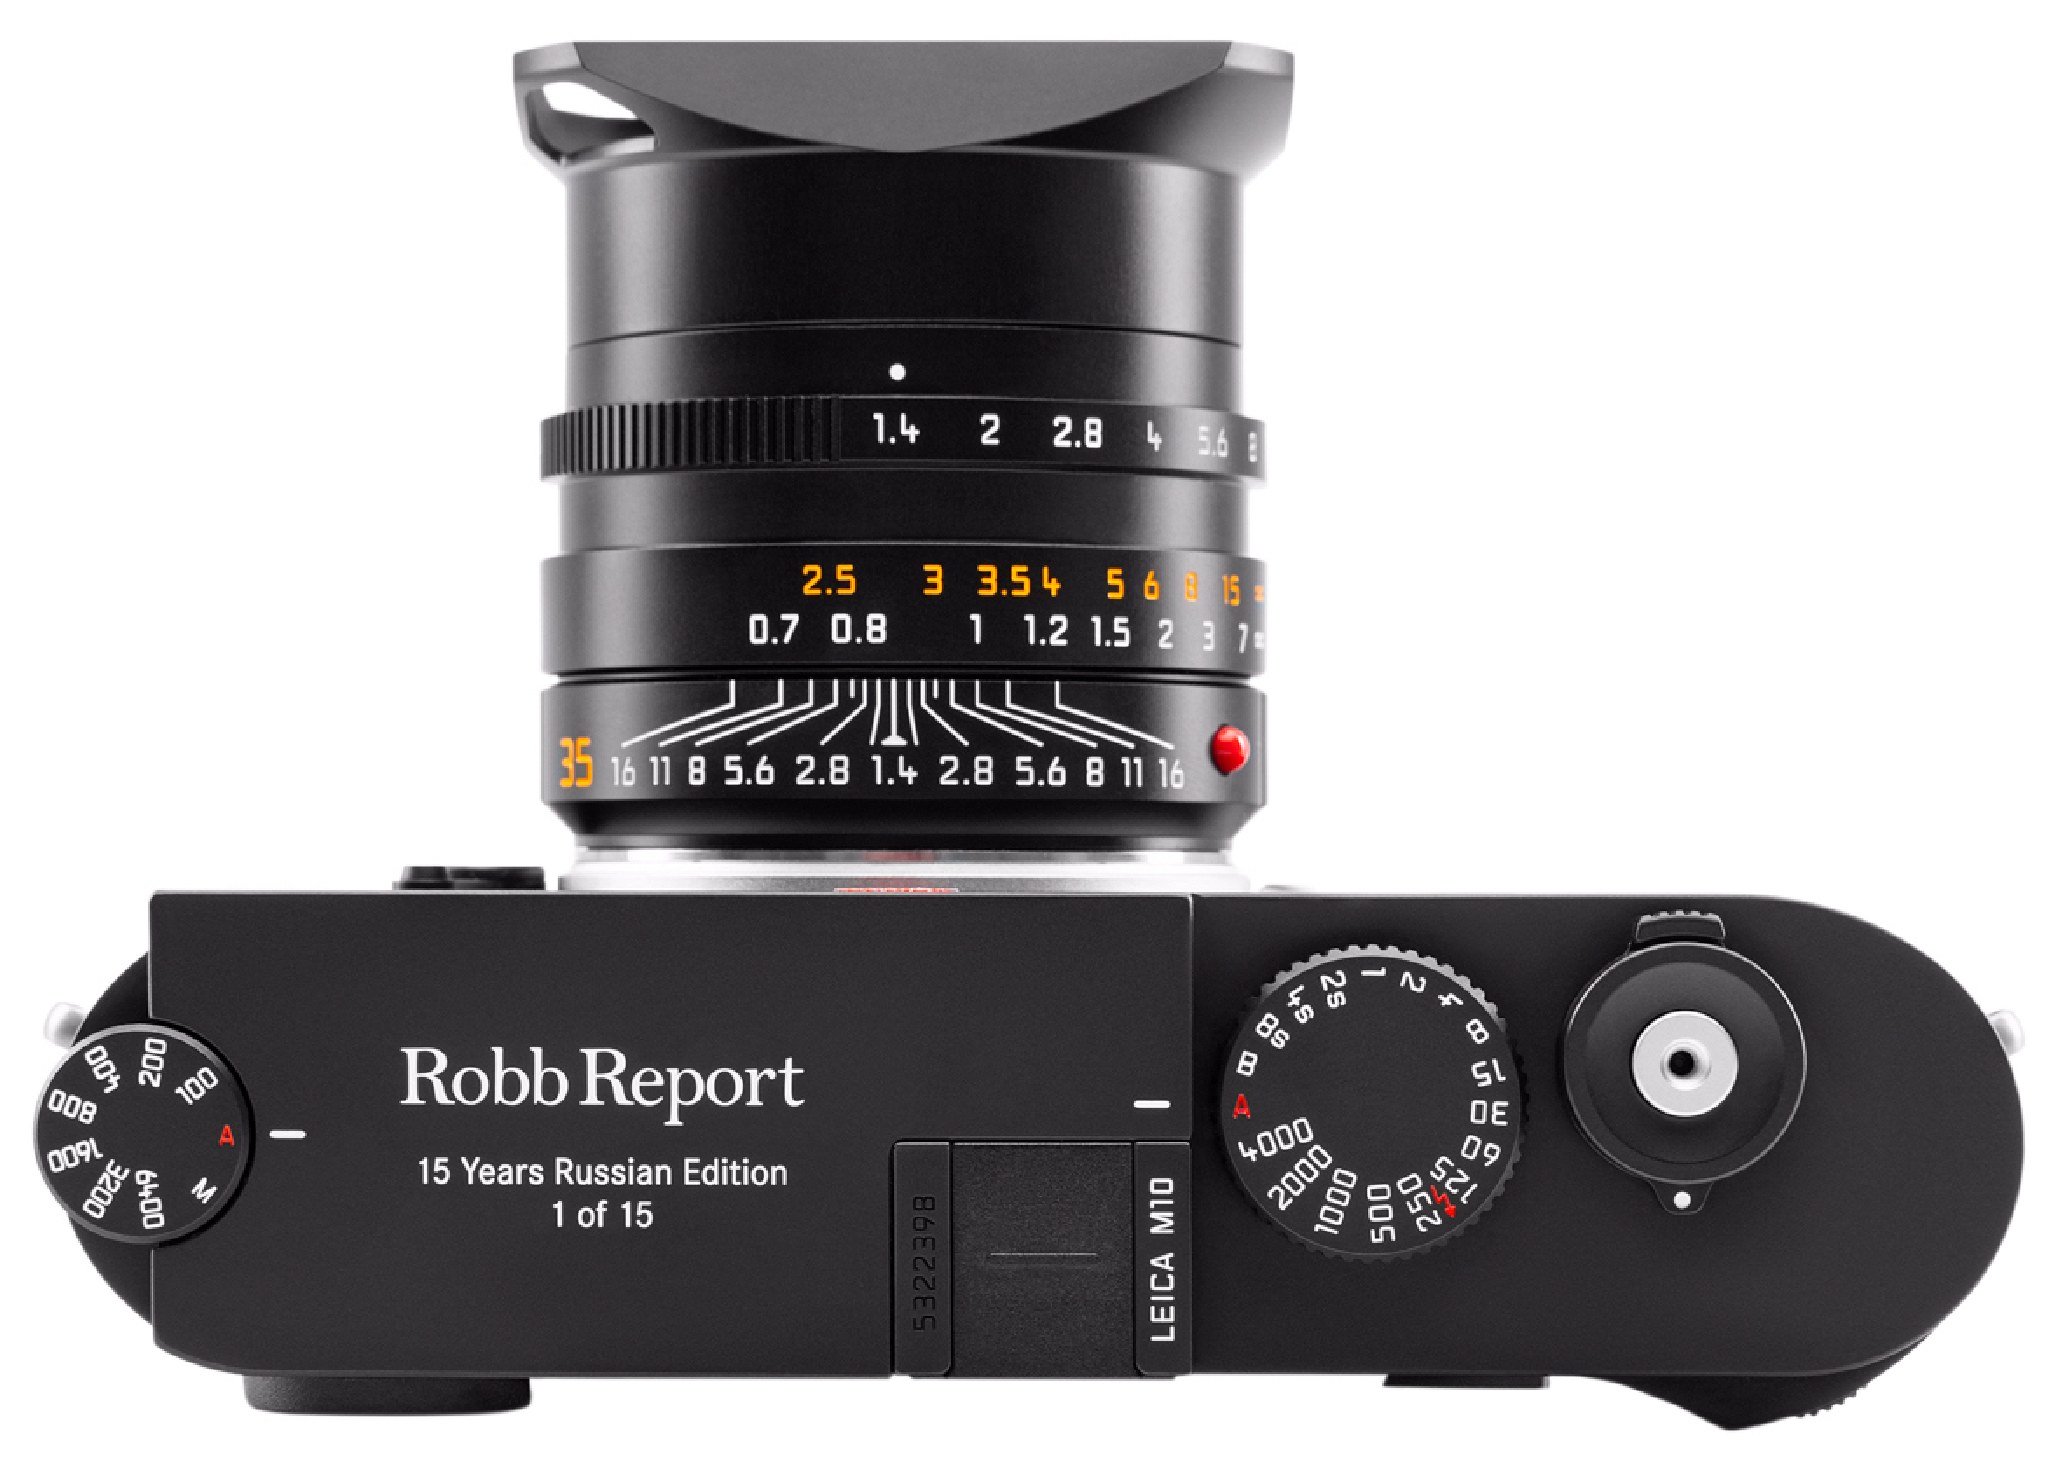 Đang tải Leica-M10-Robb-Report-Russia-15-years-limited-edition-camera-5.jpg…